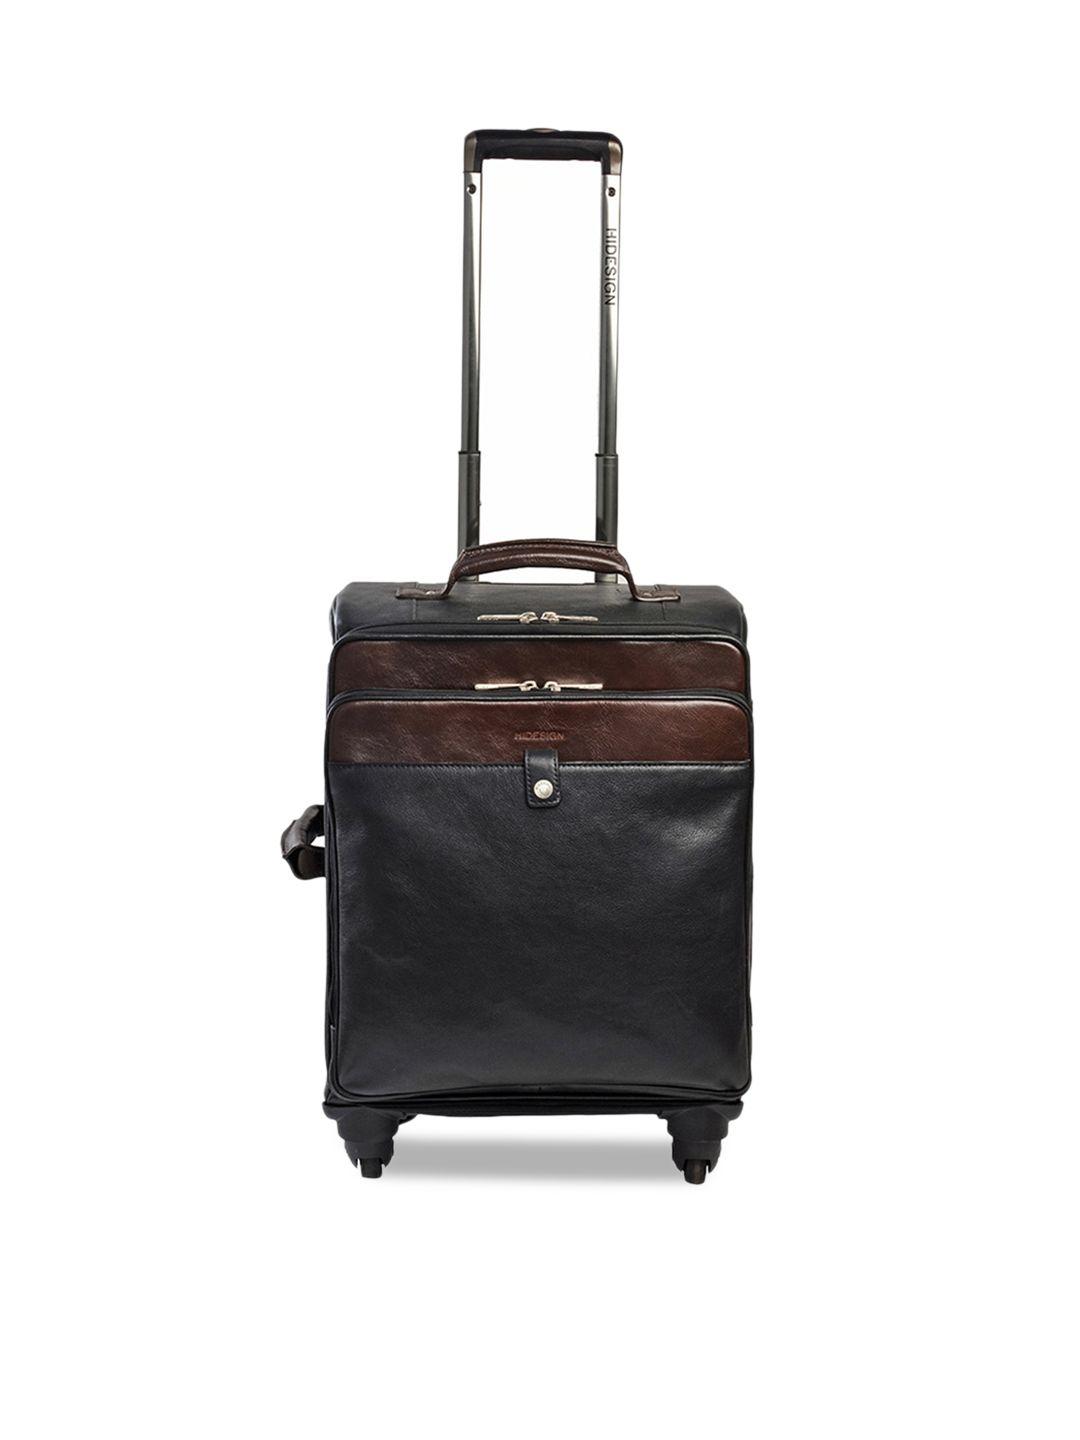 hidesign-unisex-black-solid-sundown-01-melbourne-khyber-medium-leather-trolley-suitcase